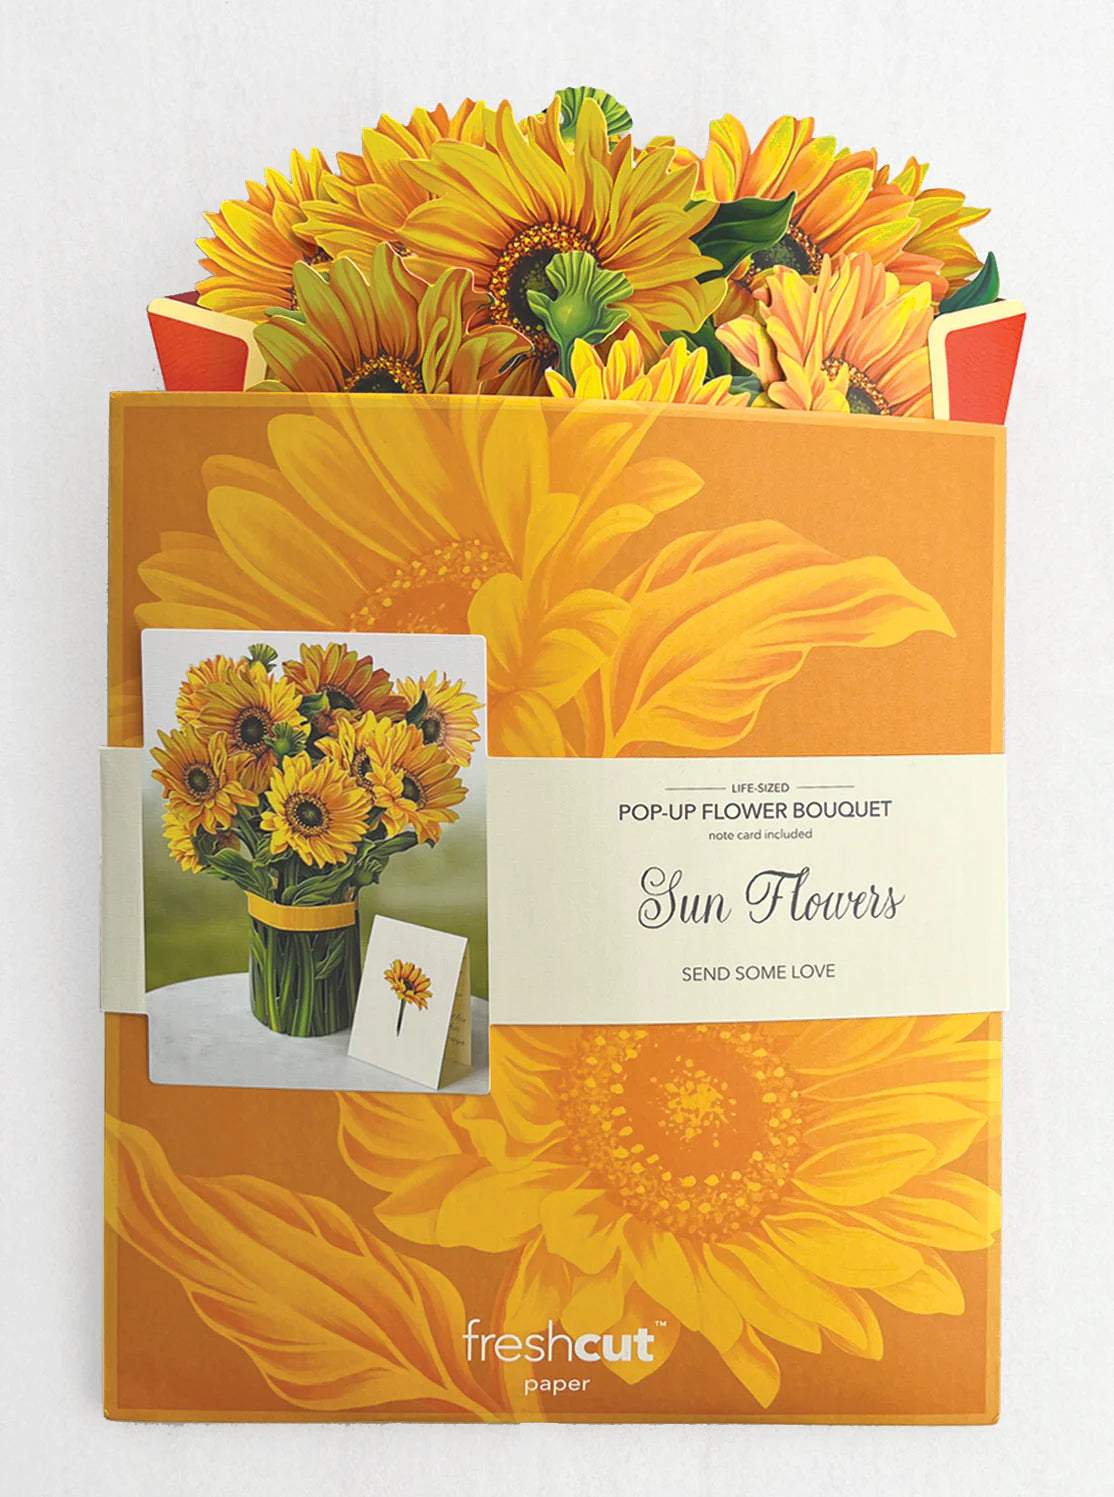 sun flower bouquet package